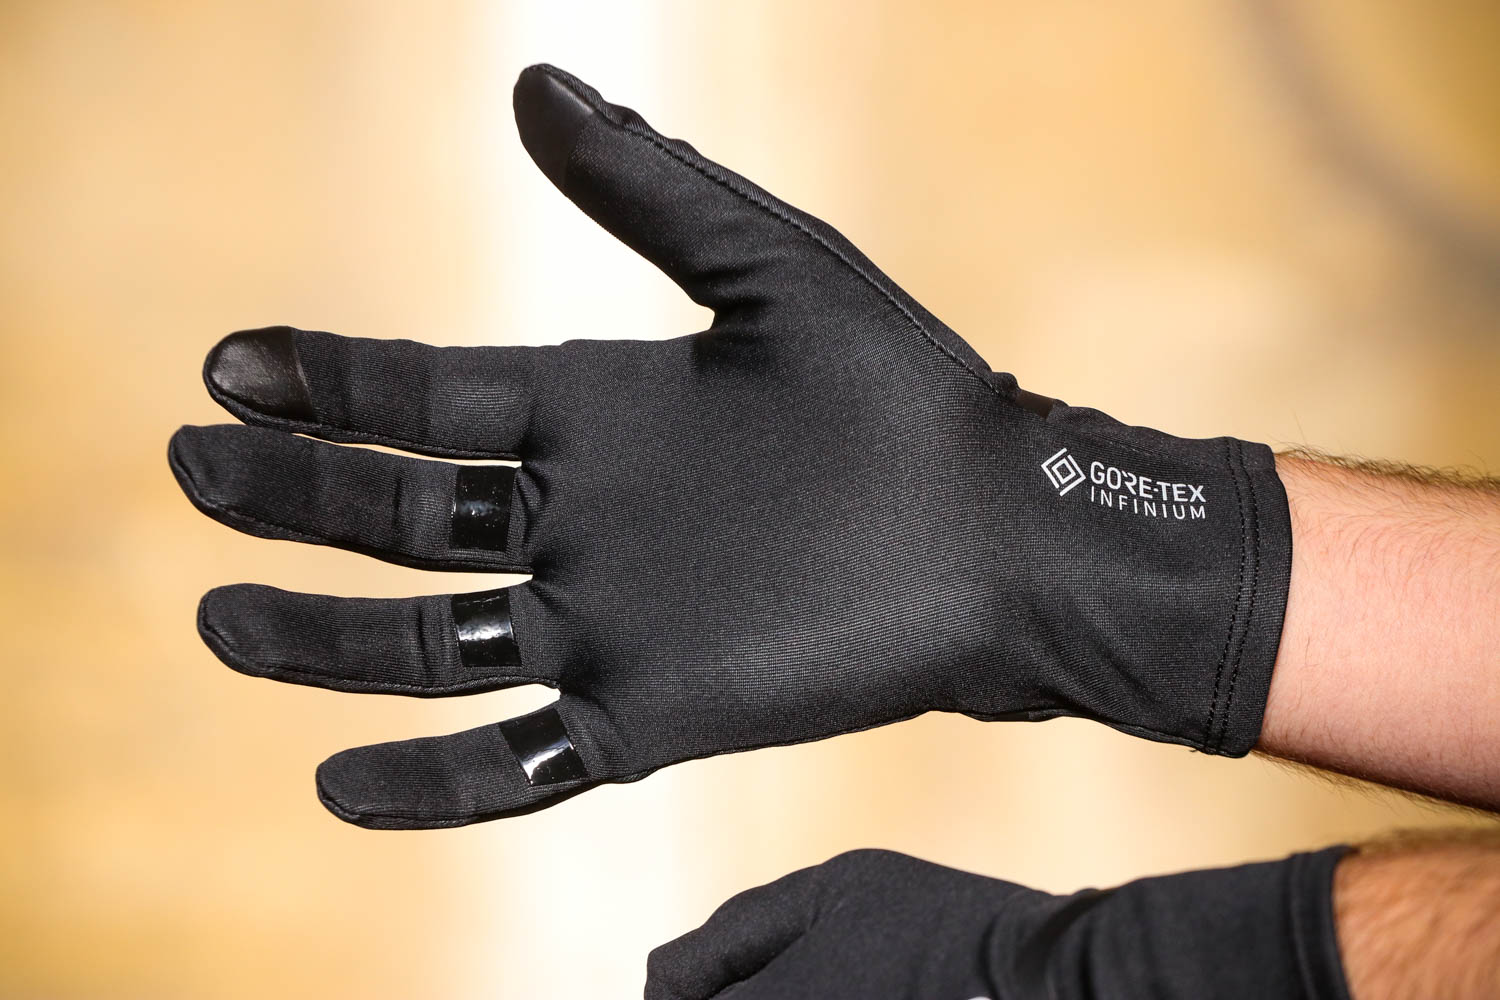 GORE Wear C3 Urban Handschuhe 